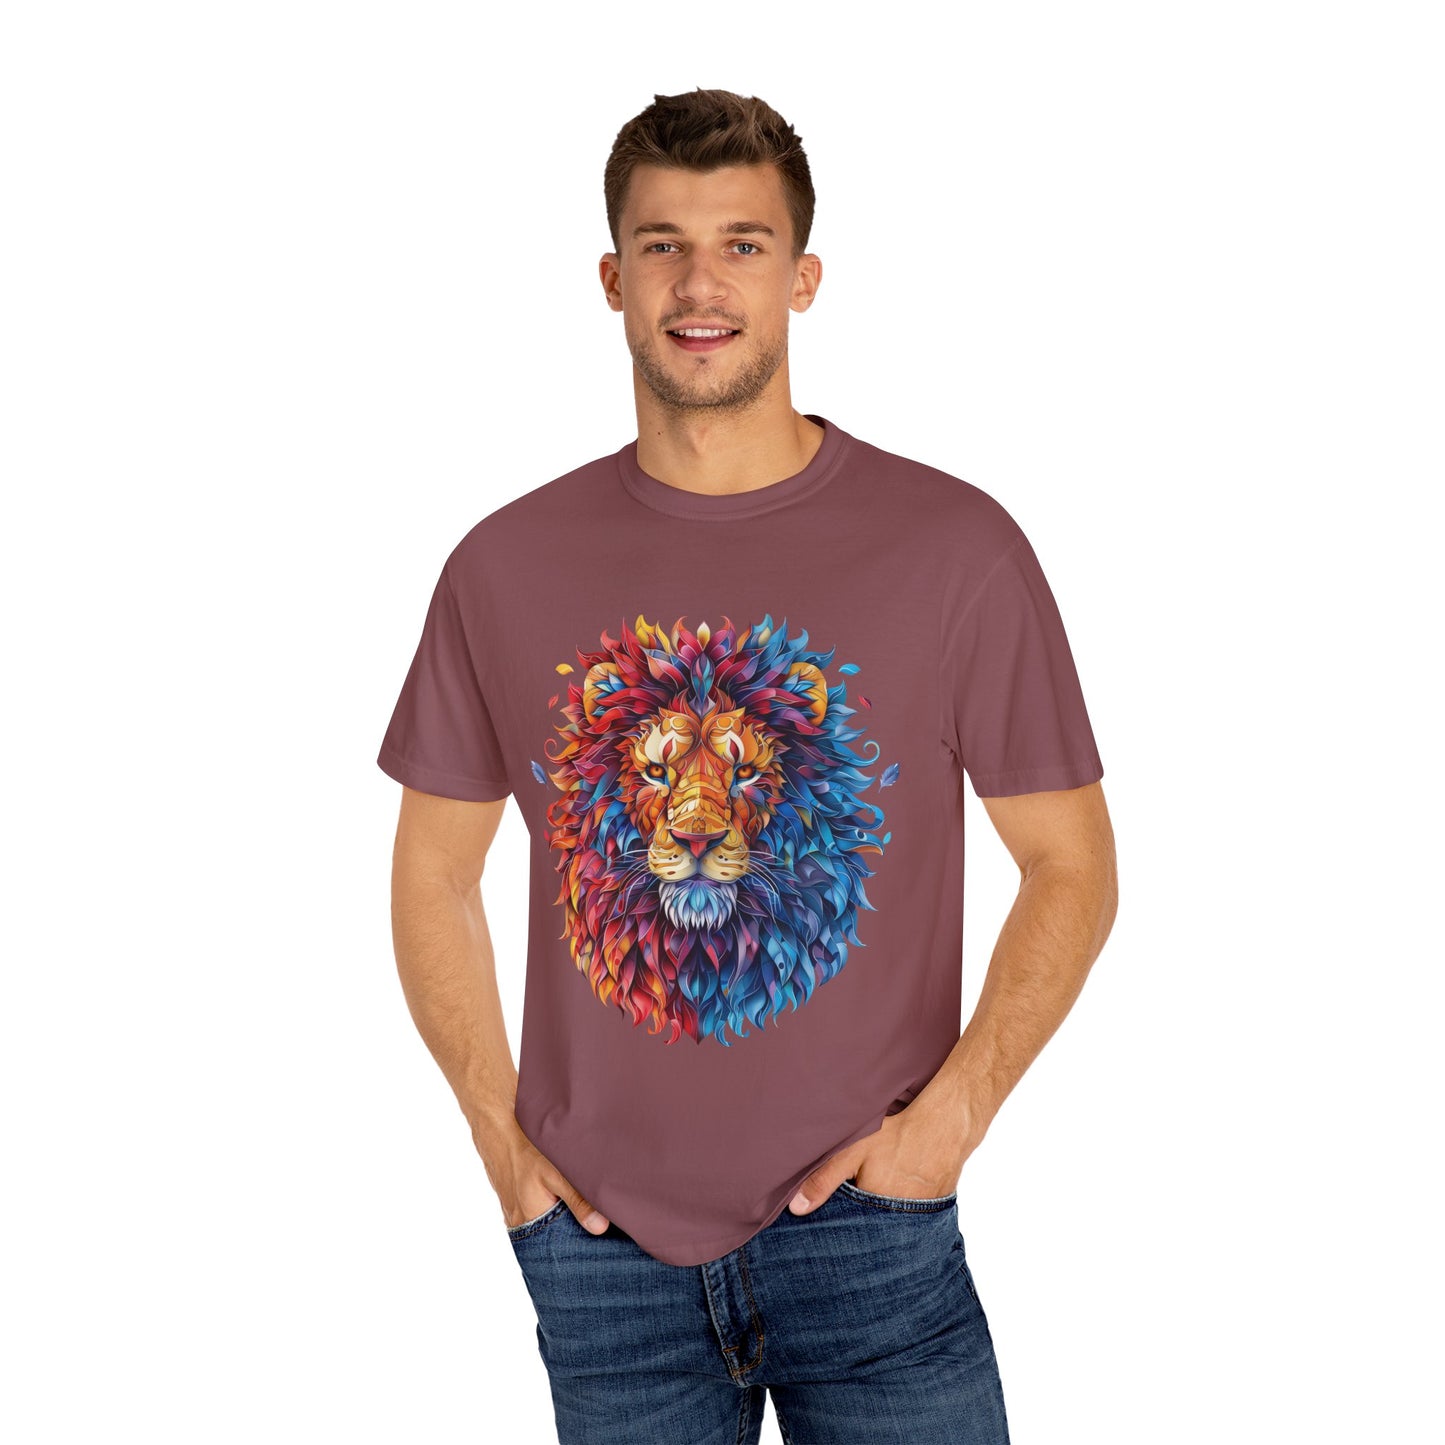 Lion Head Cool Graphic Design Novelty Unisex Garment-dyed T-shirt Cotton Funny Humorous Graphic Soft Premium Unisex Men Women Brick T-shirt Birthday Gift-30